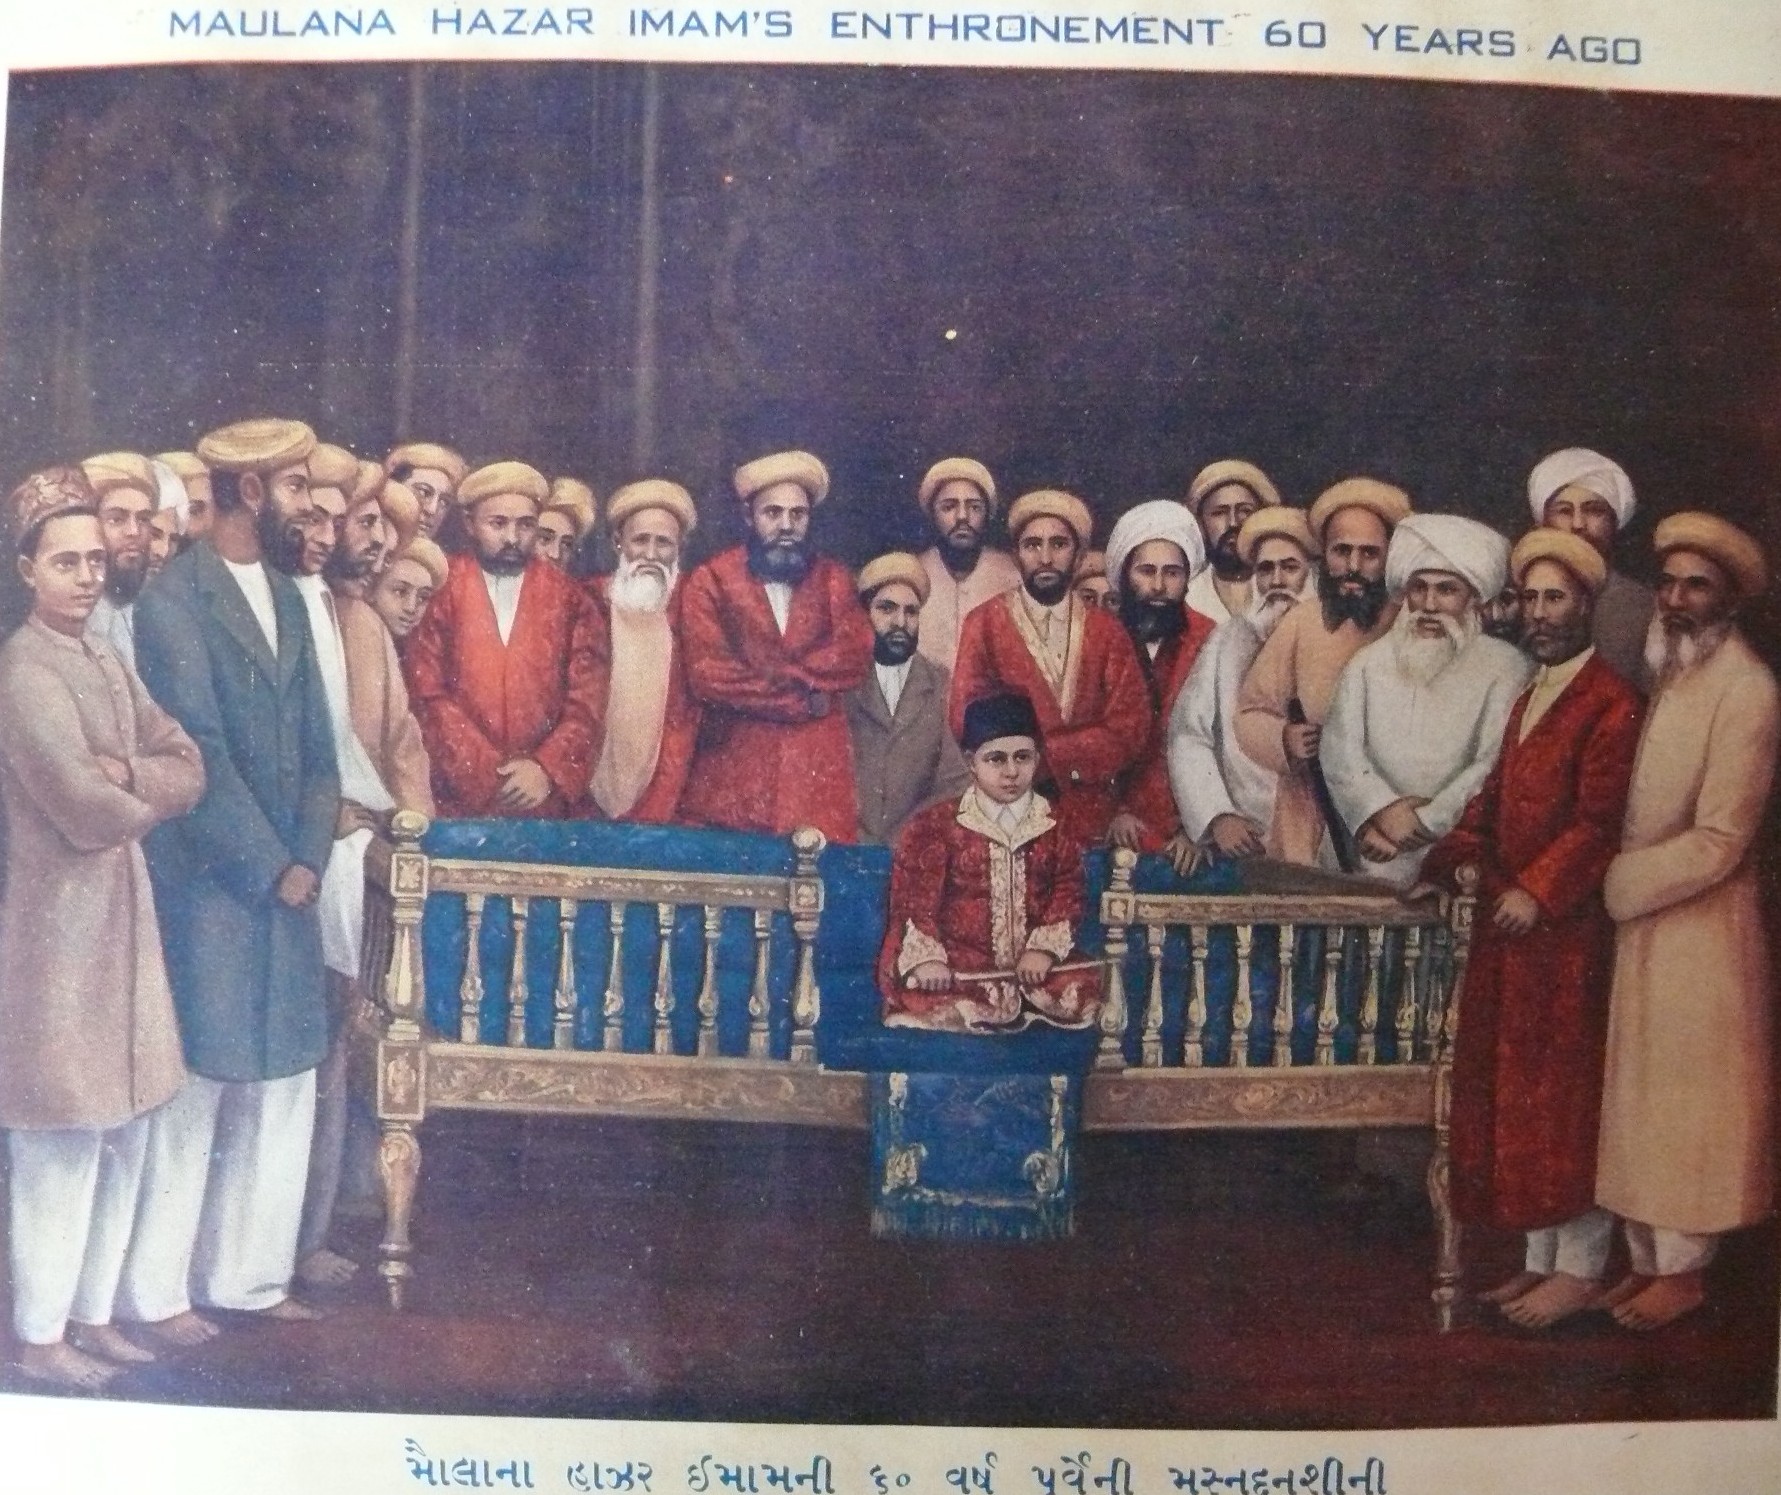 1900-2000-noorani-family-album-0225-aga-khan-iii-enthronment-age-eight